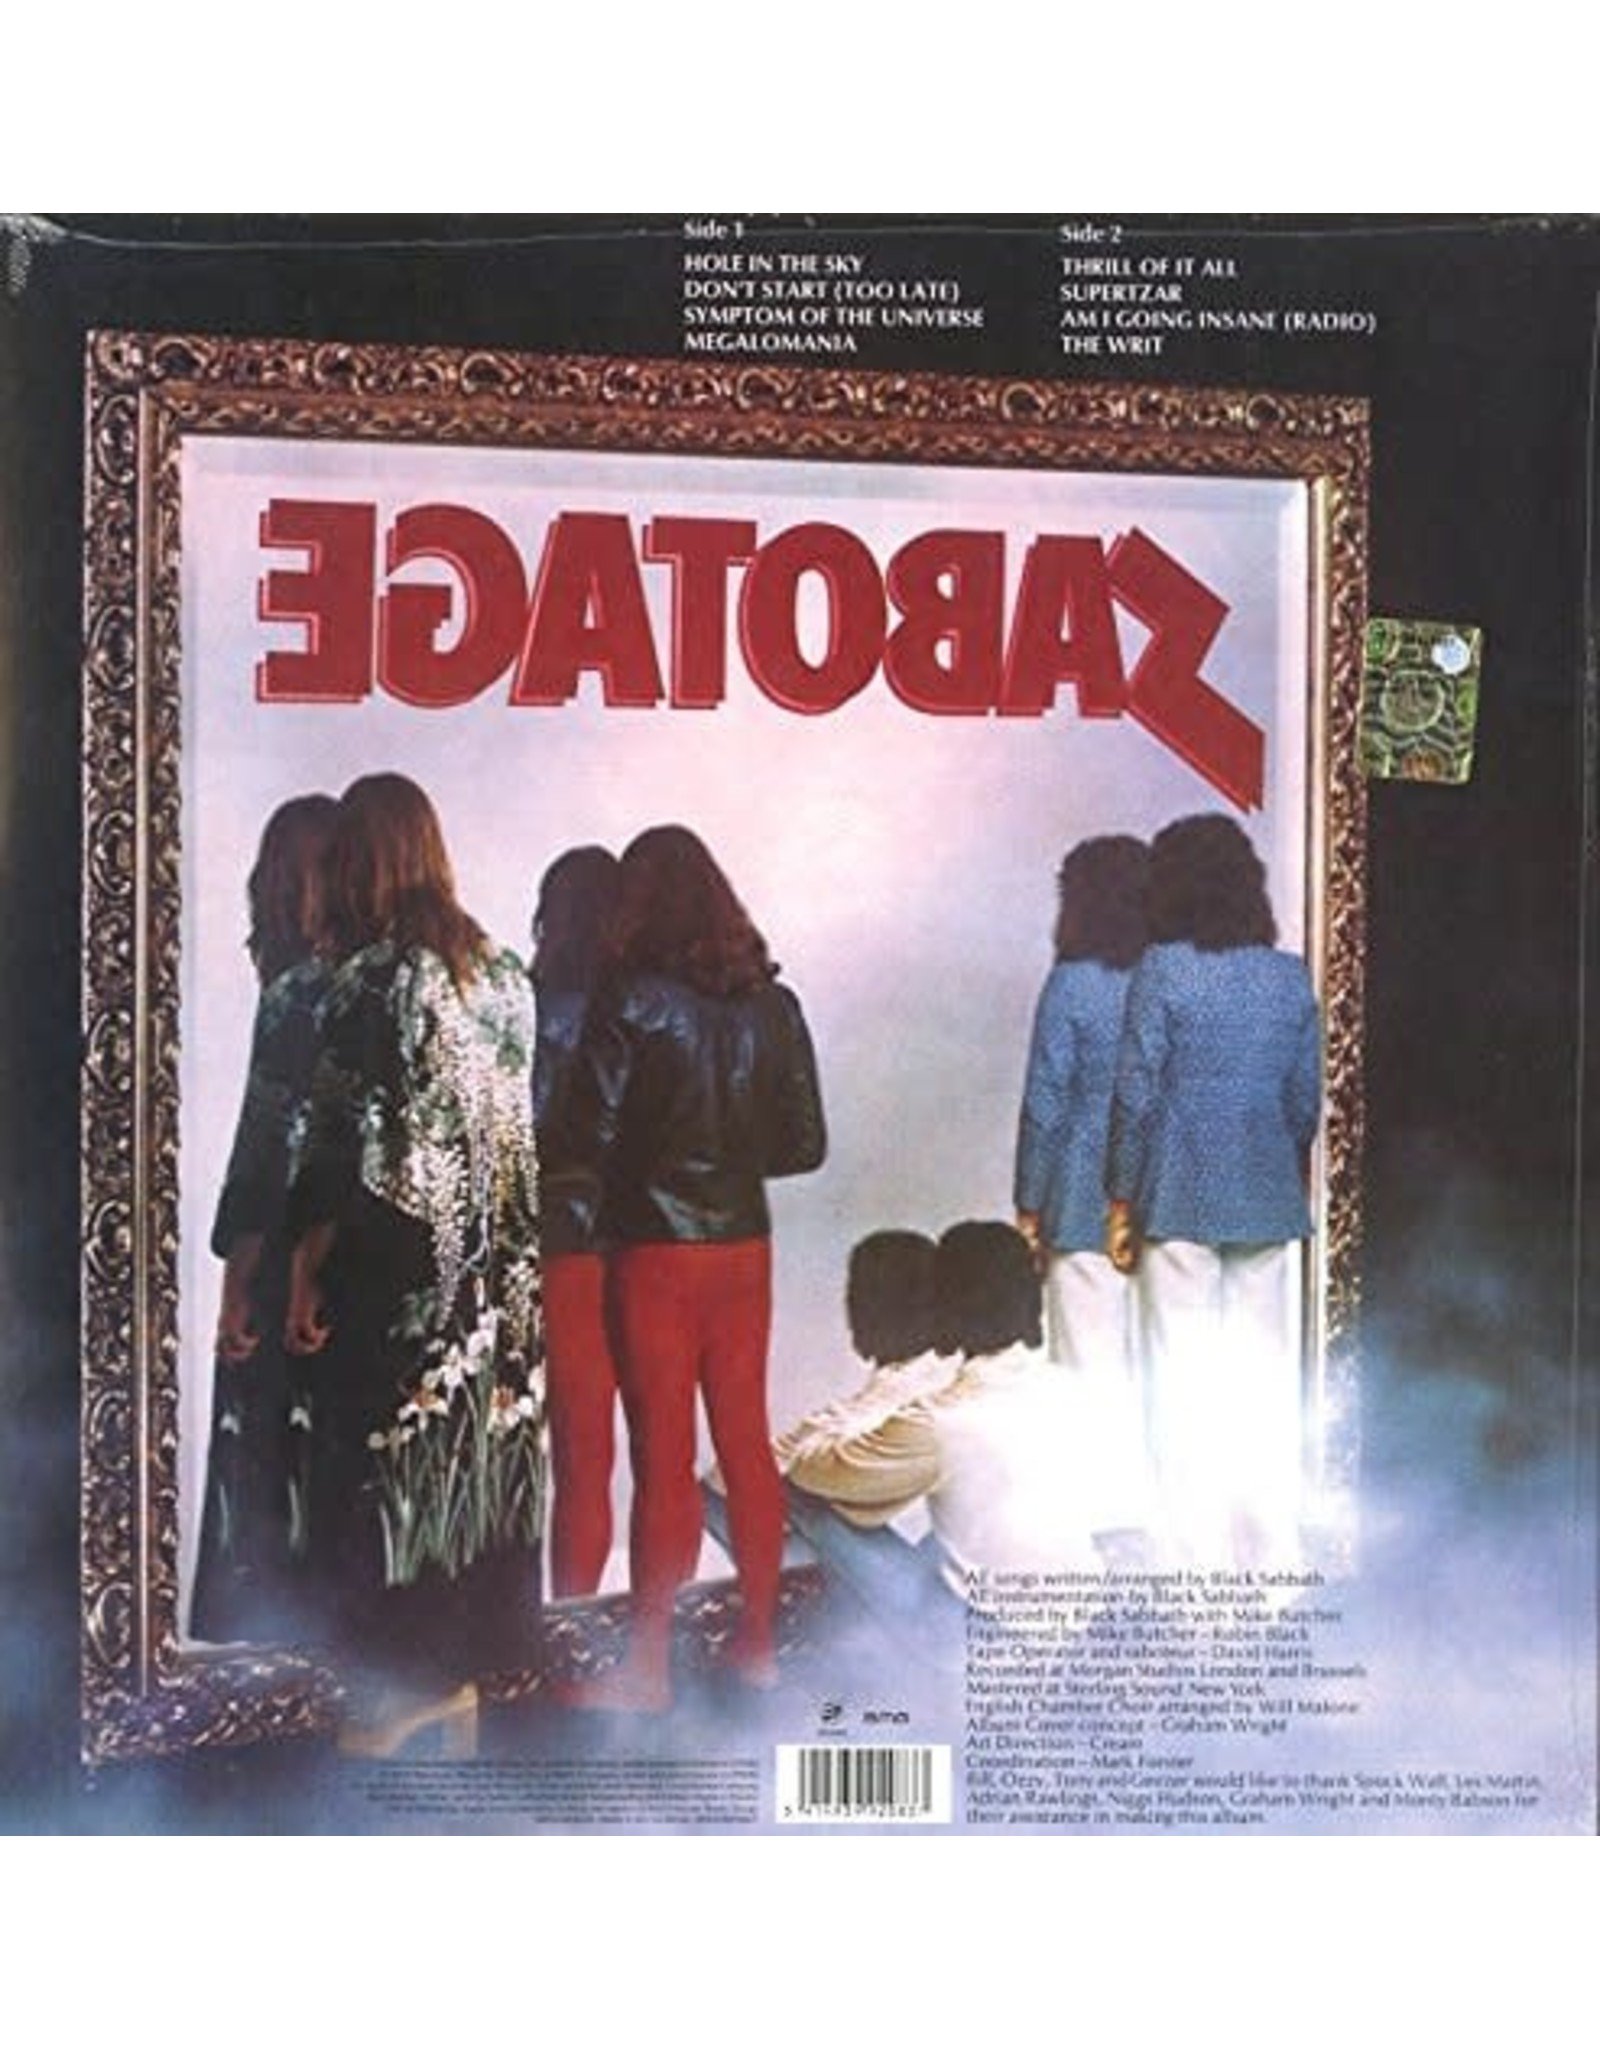 Black Sabbath - Sabotage (UK Edition)